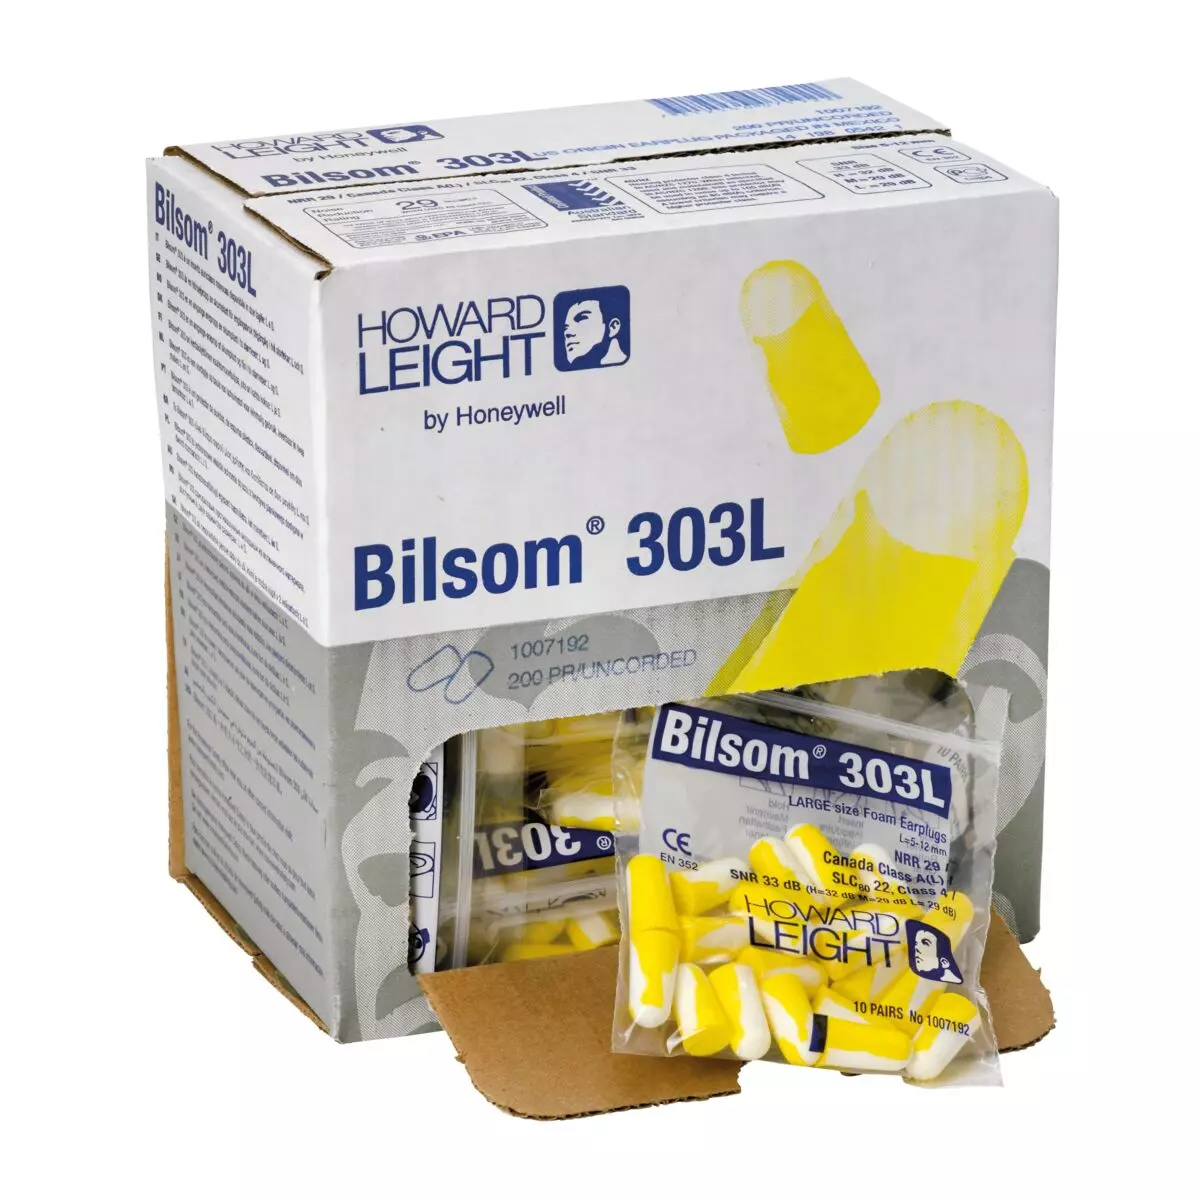 Pocket pack of Bilsom 303 earplugs in a distribution box - L